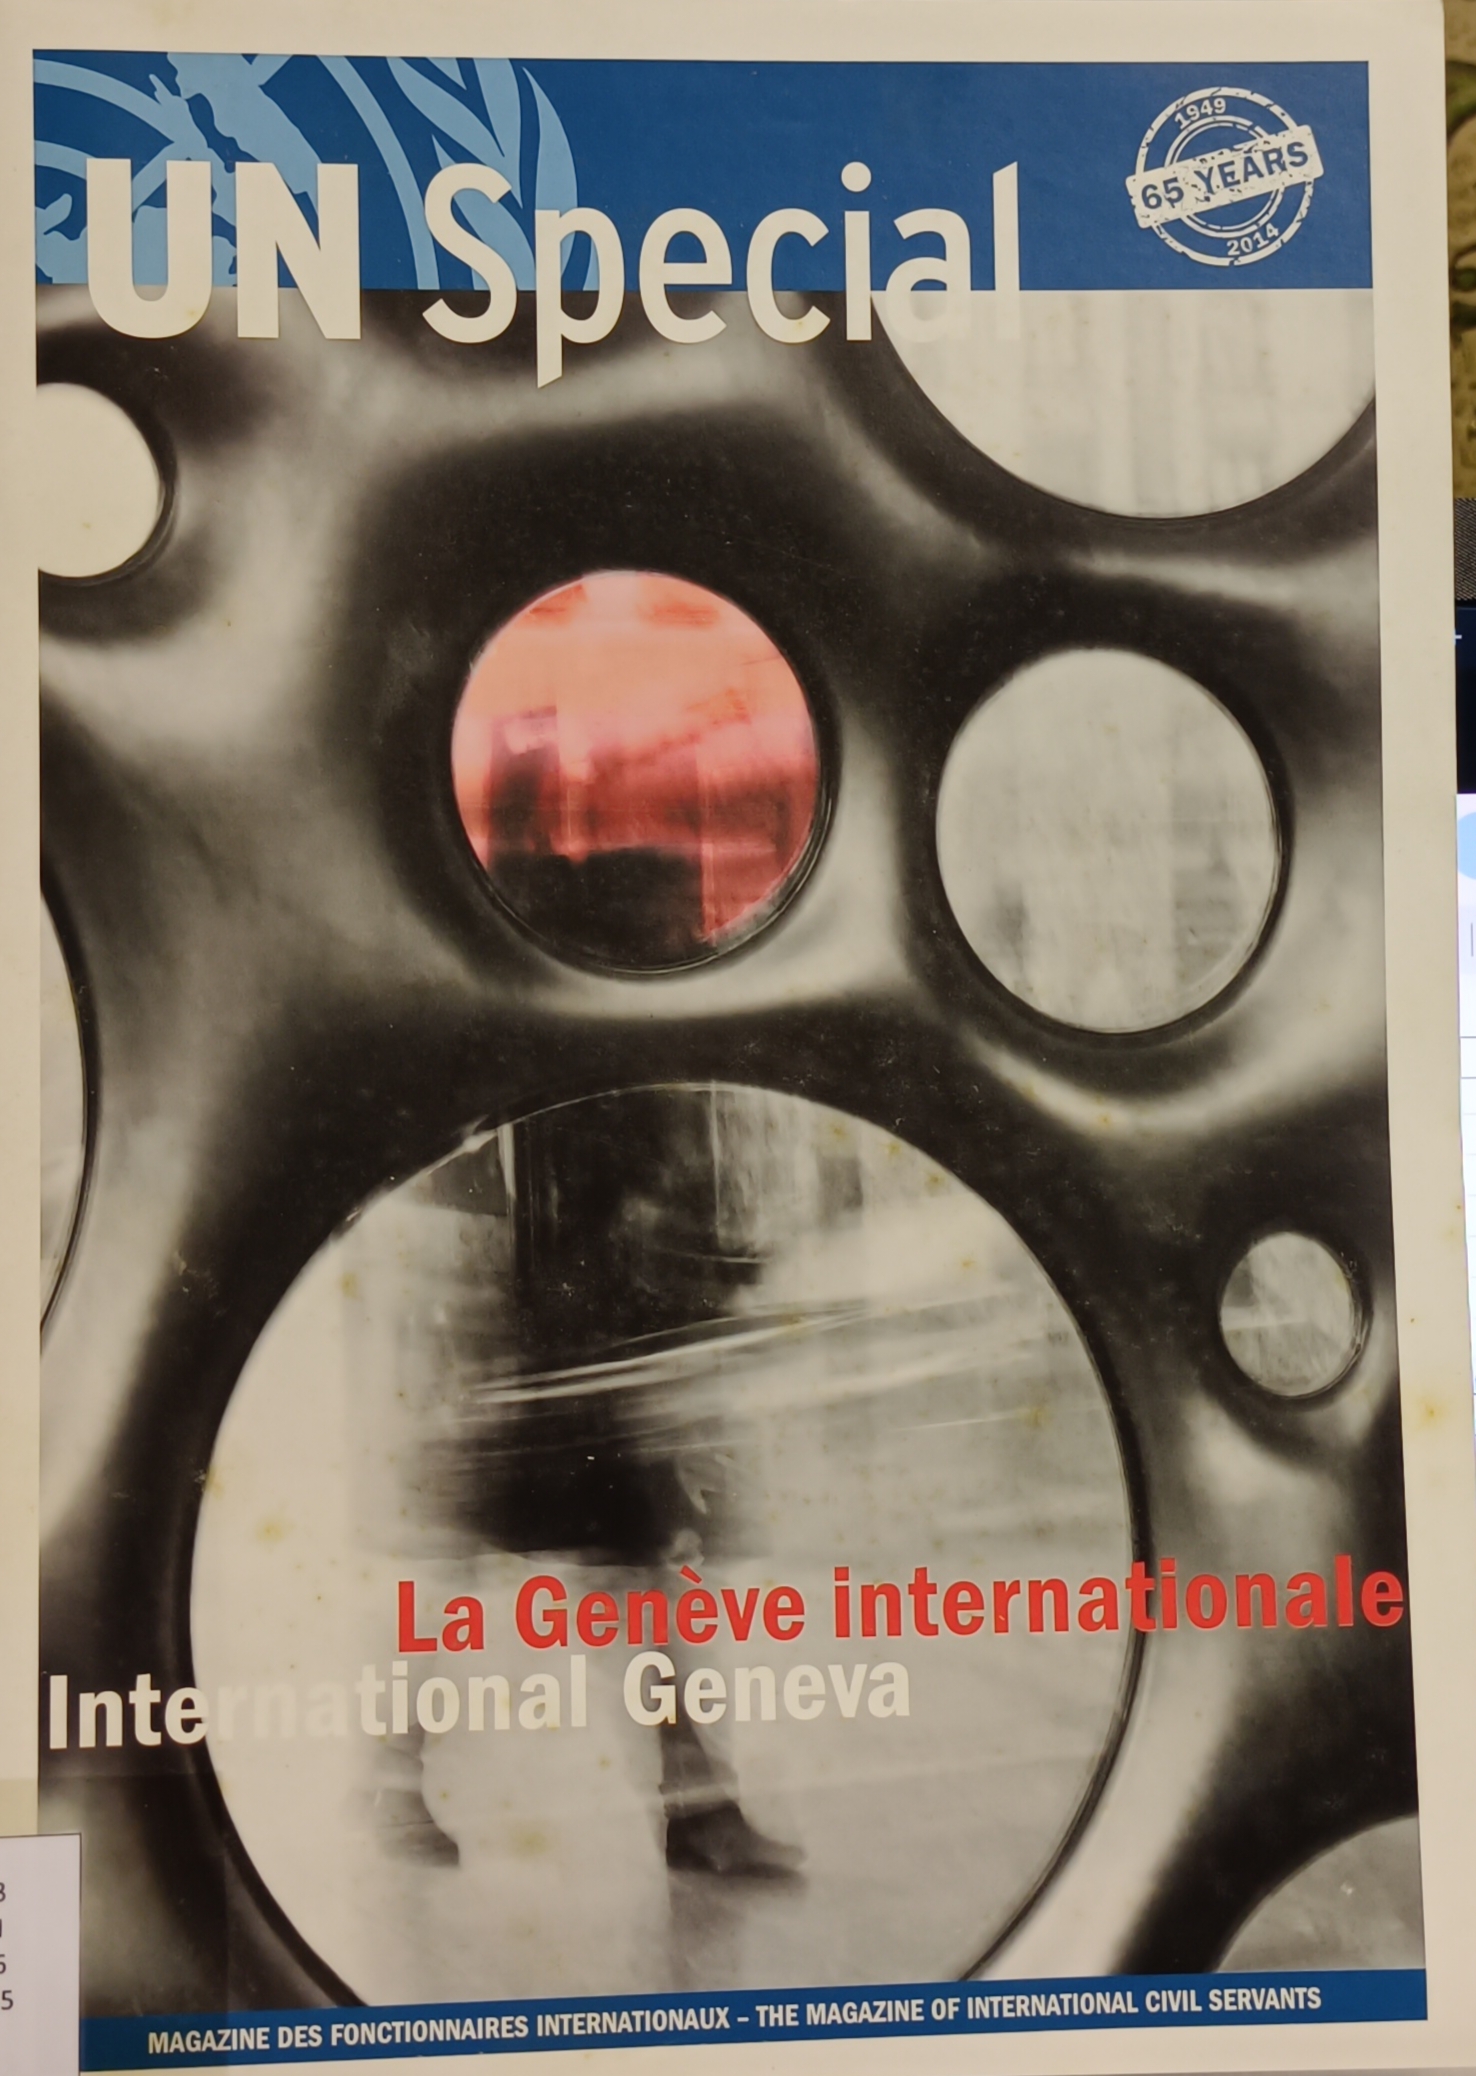 Cover image for UN Special No. 746 / Feb 2015 bibliographic